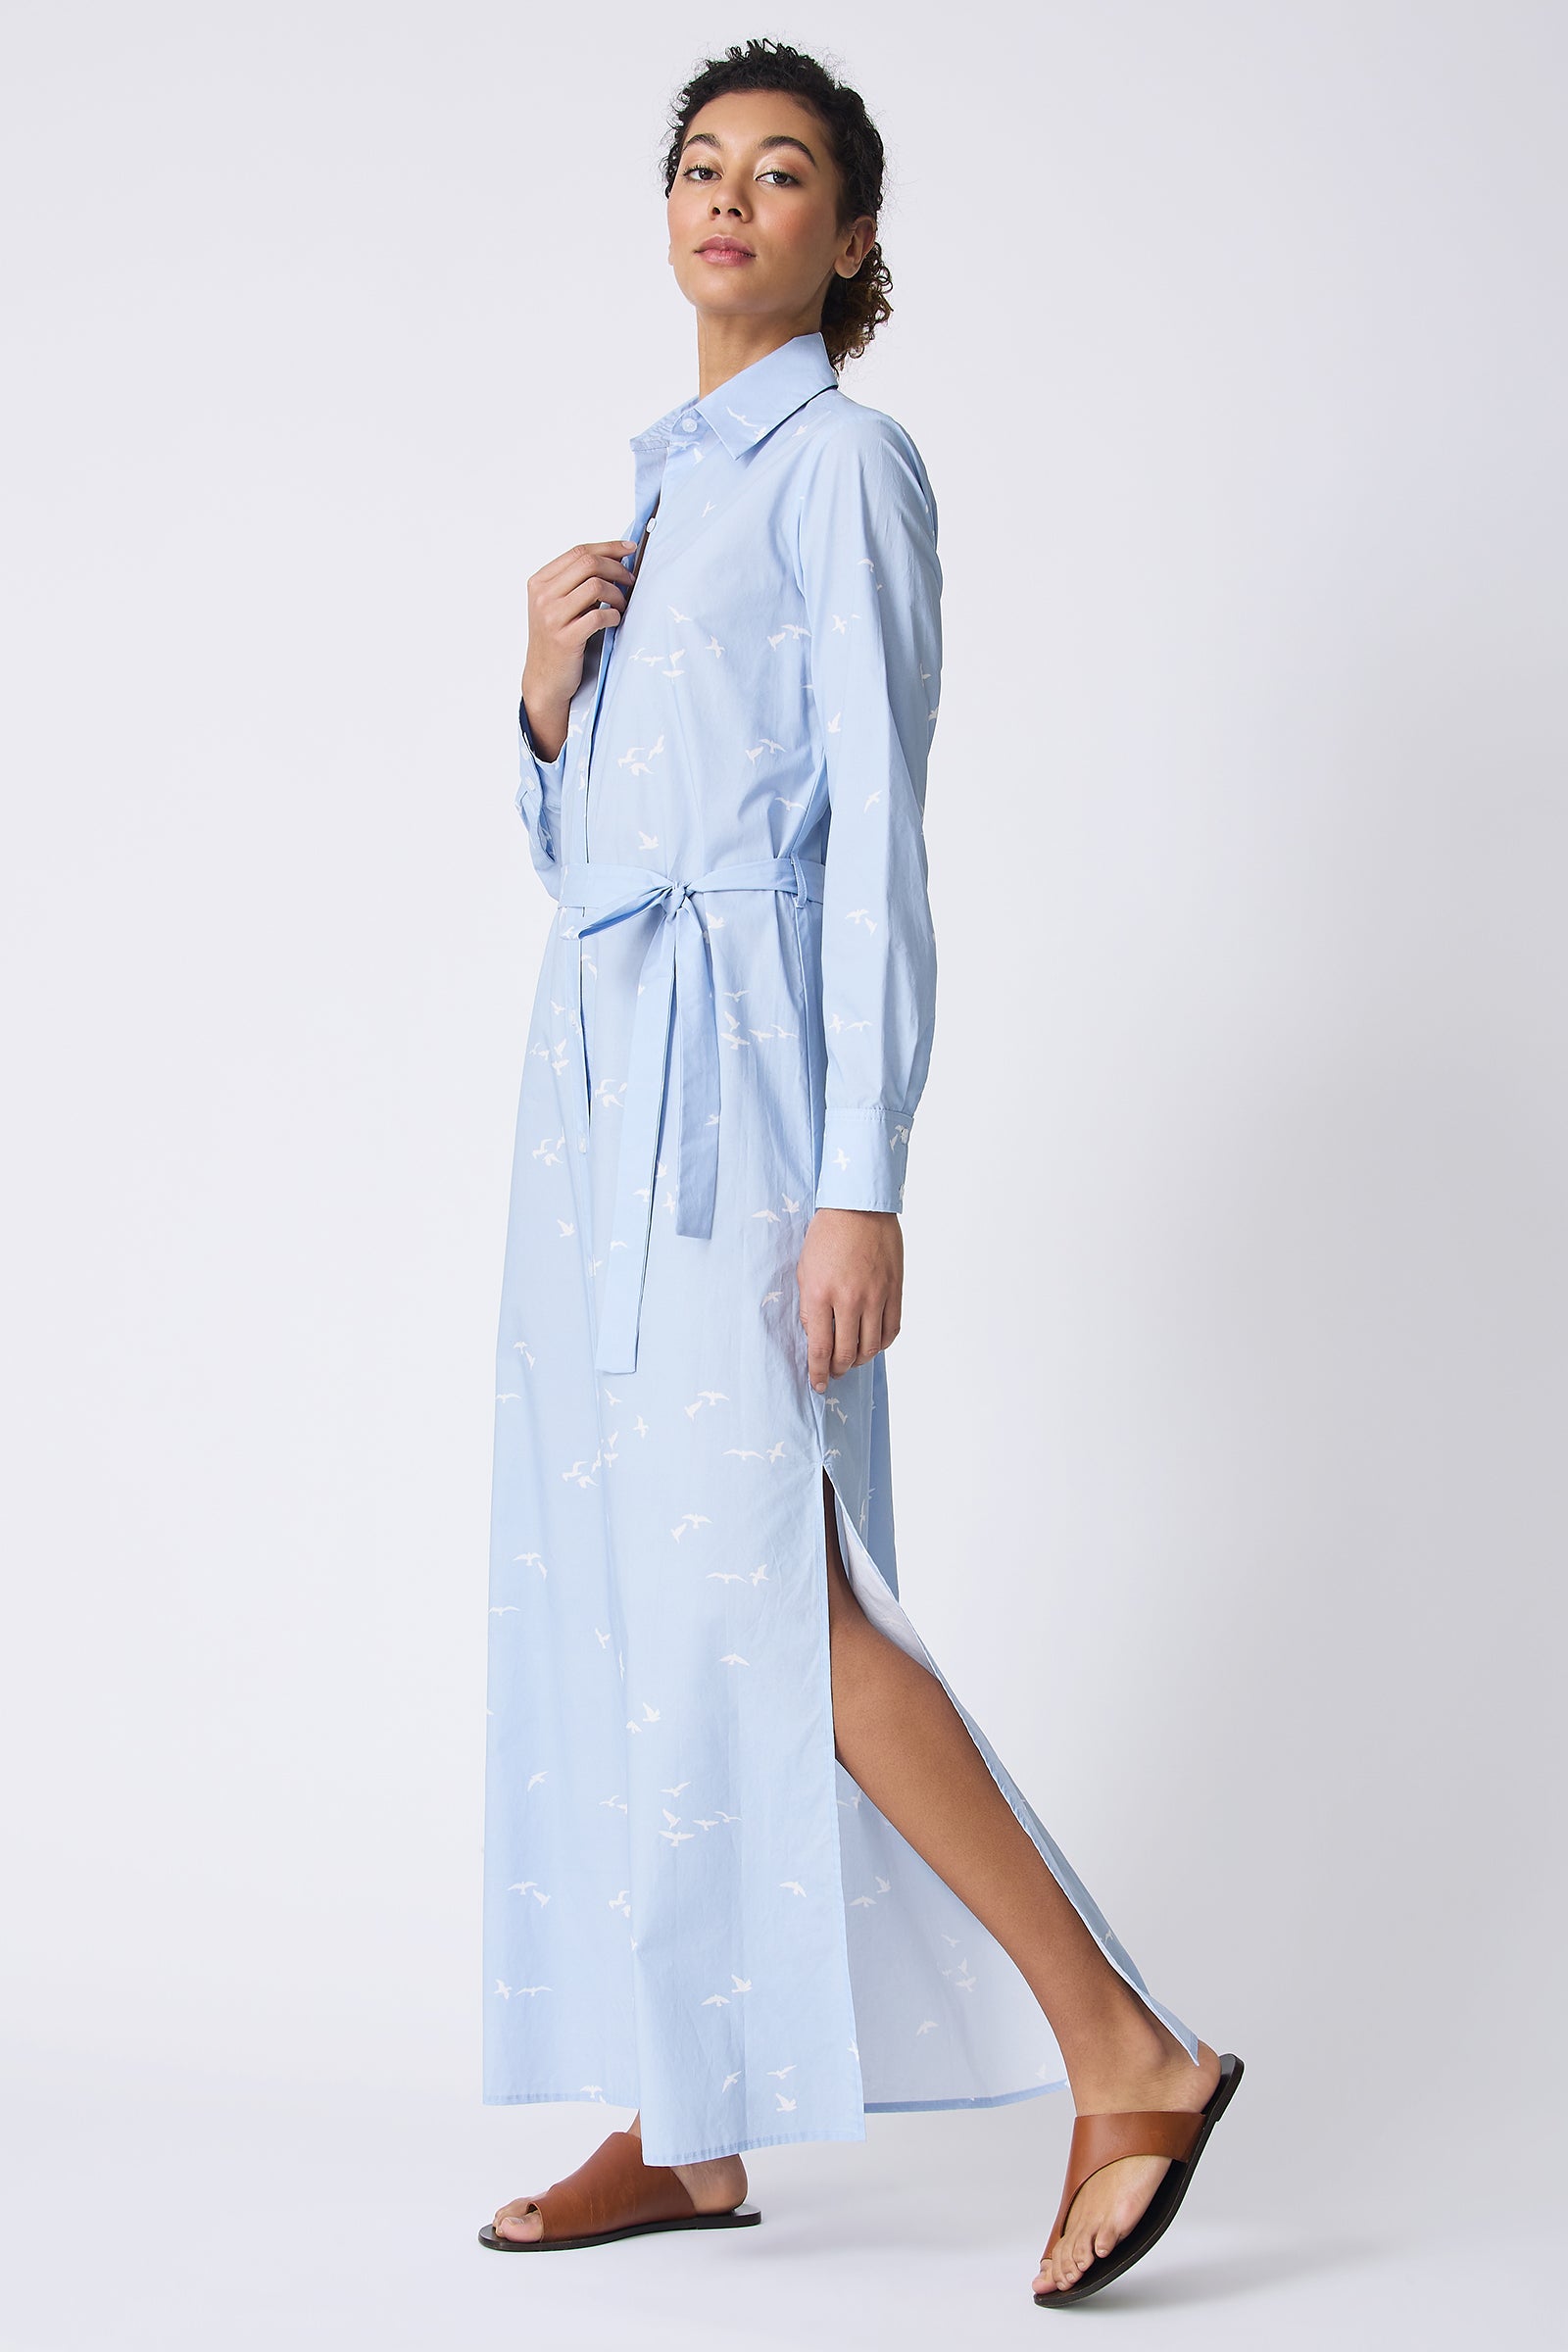 Kal Rieman June Maxi Dress in Oxford Blue Bird Print on model walking full side view